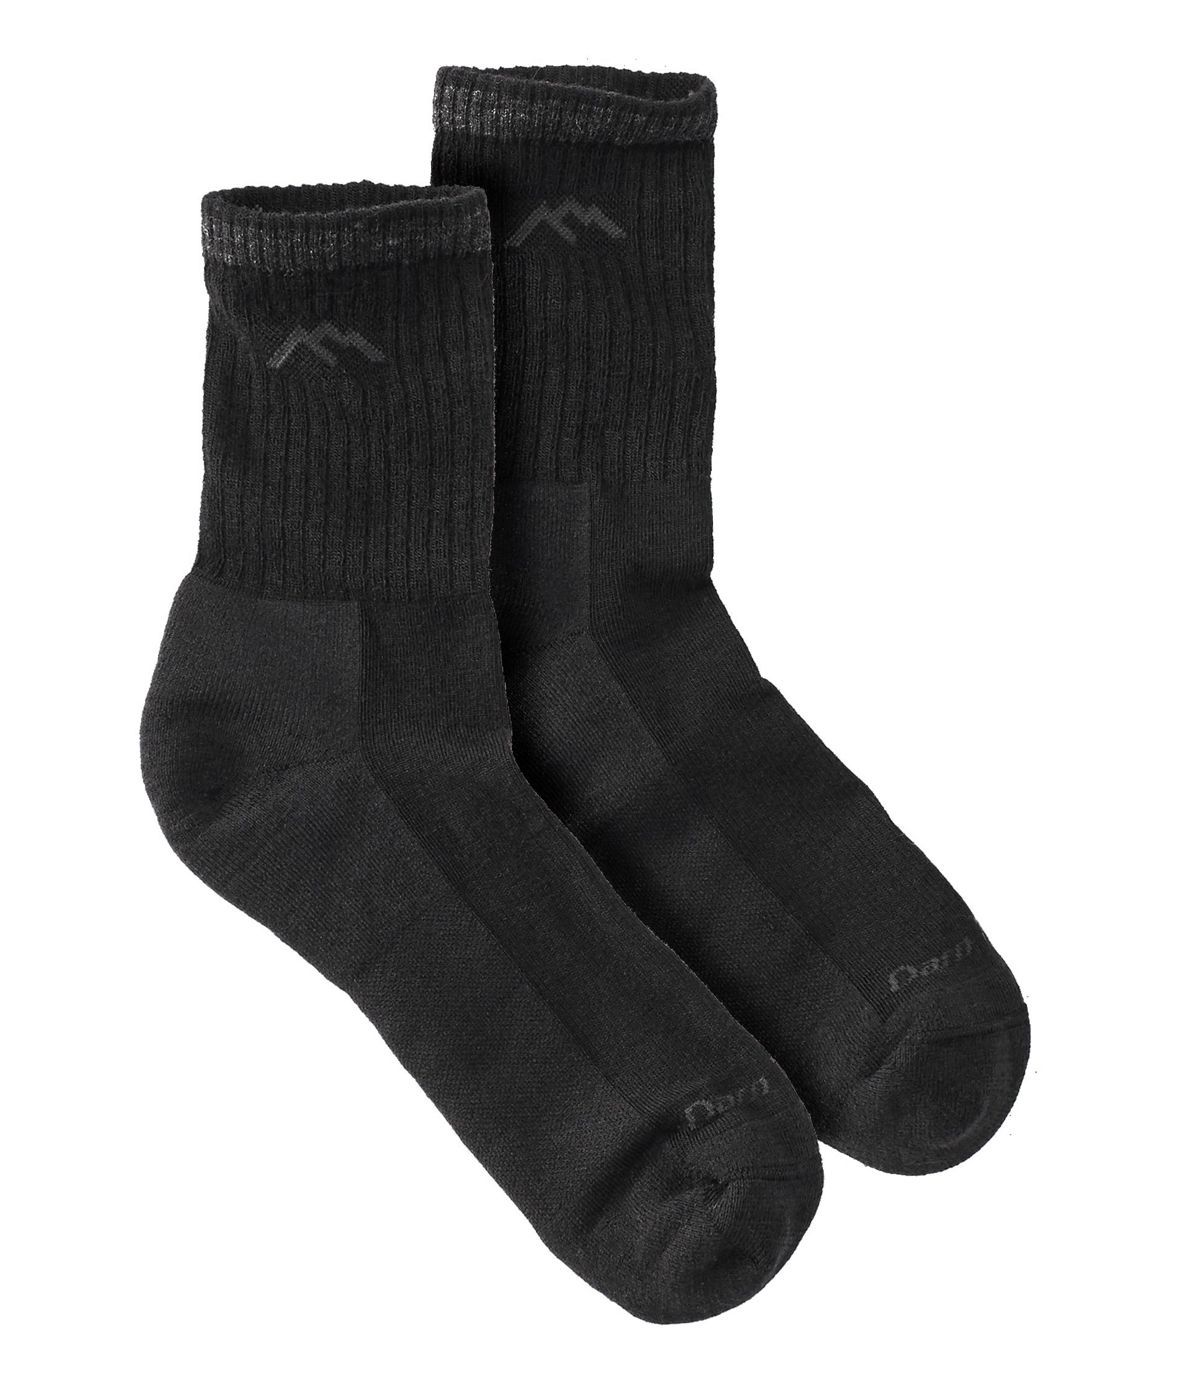 Men's Darn Tough Cushion Socks, Micro-Crew | L.L. Bean